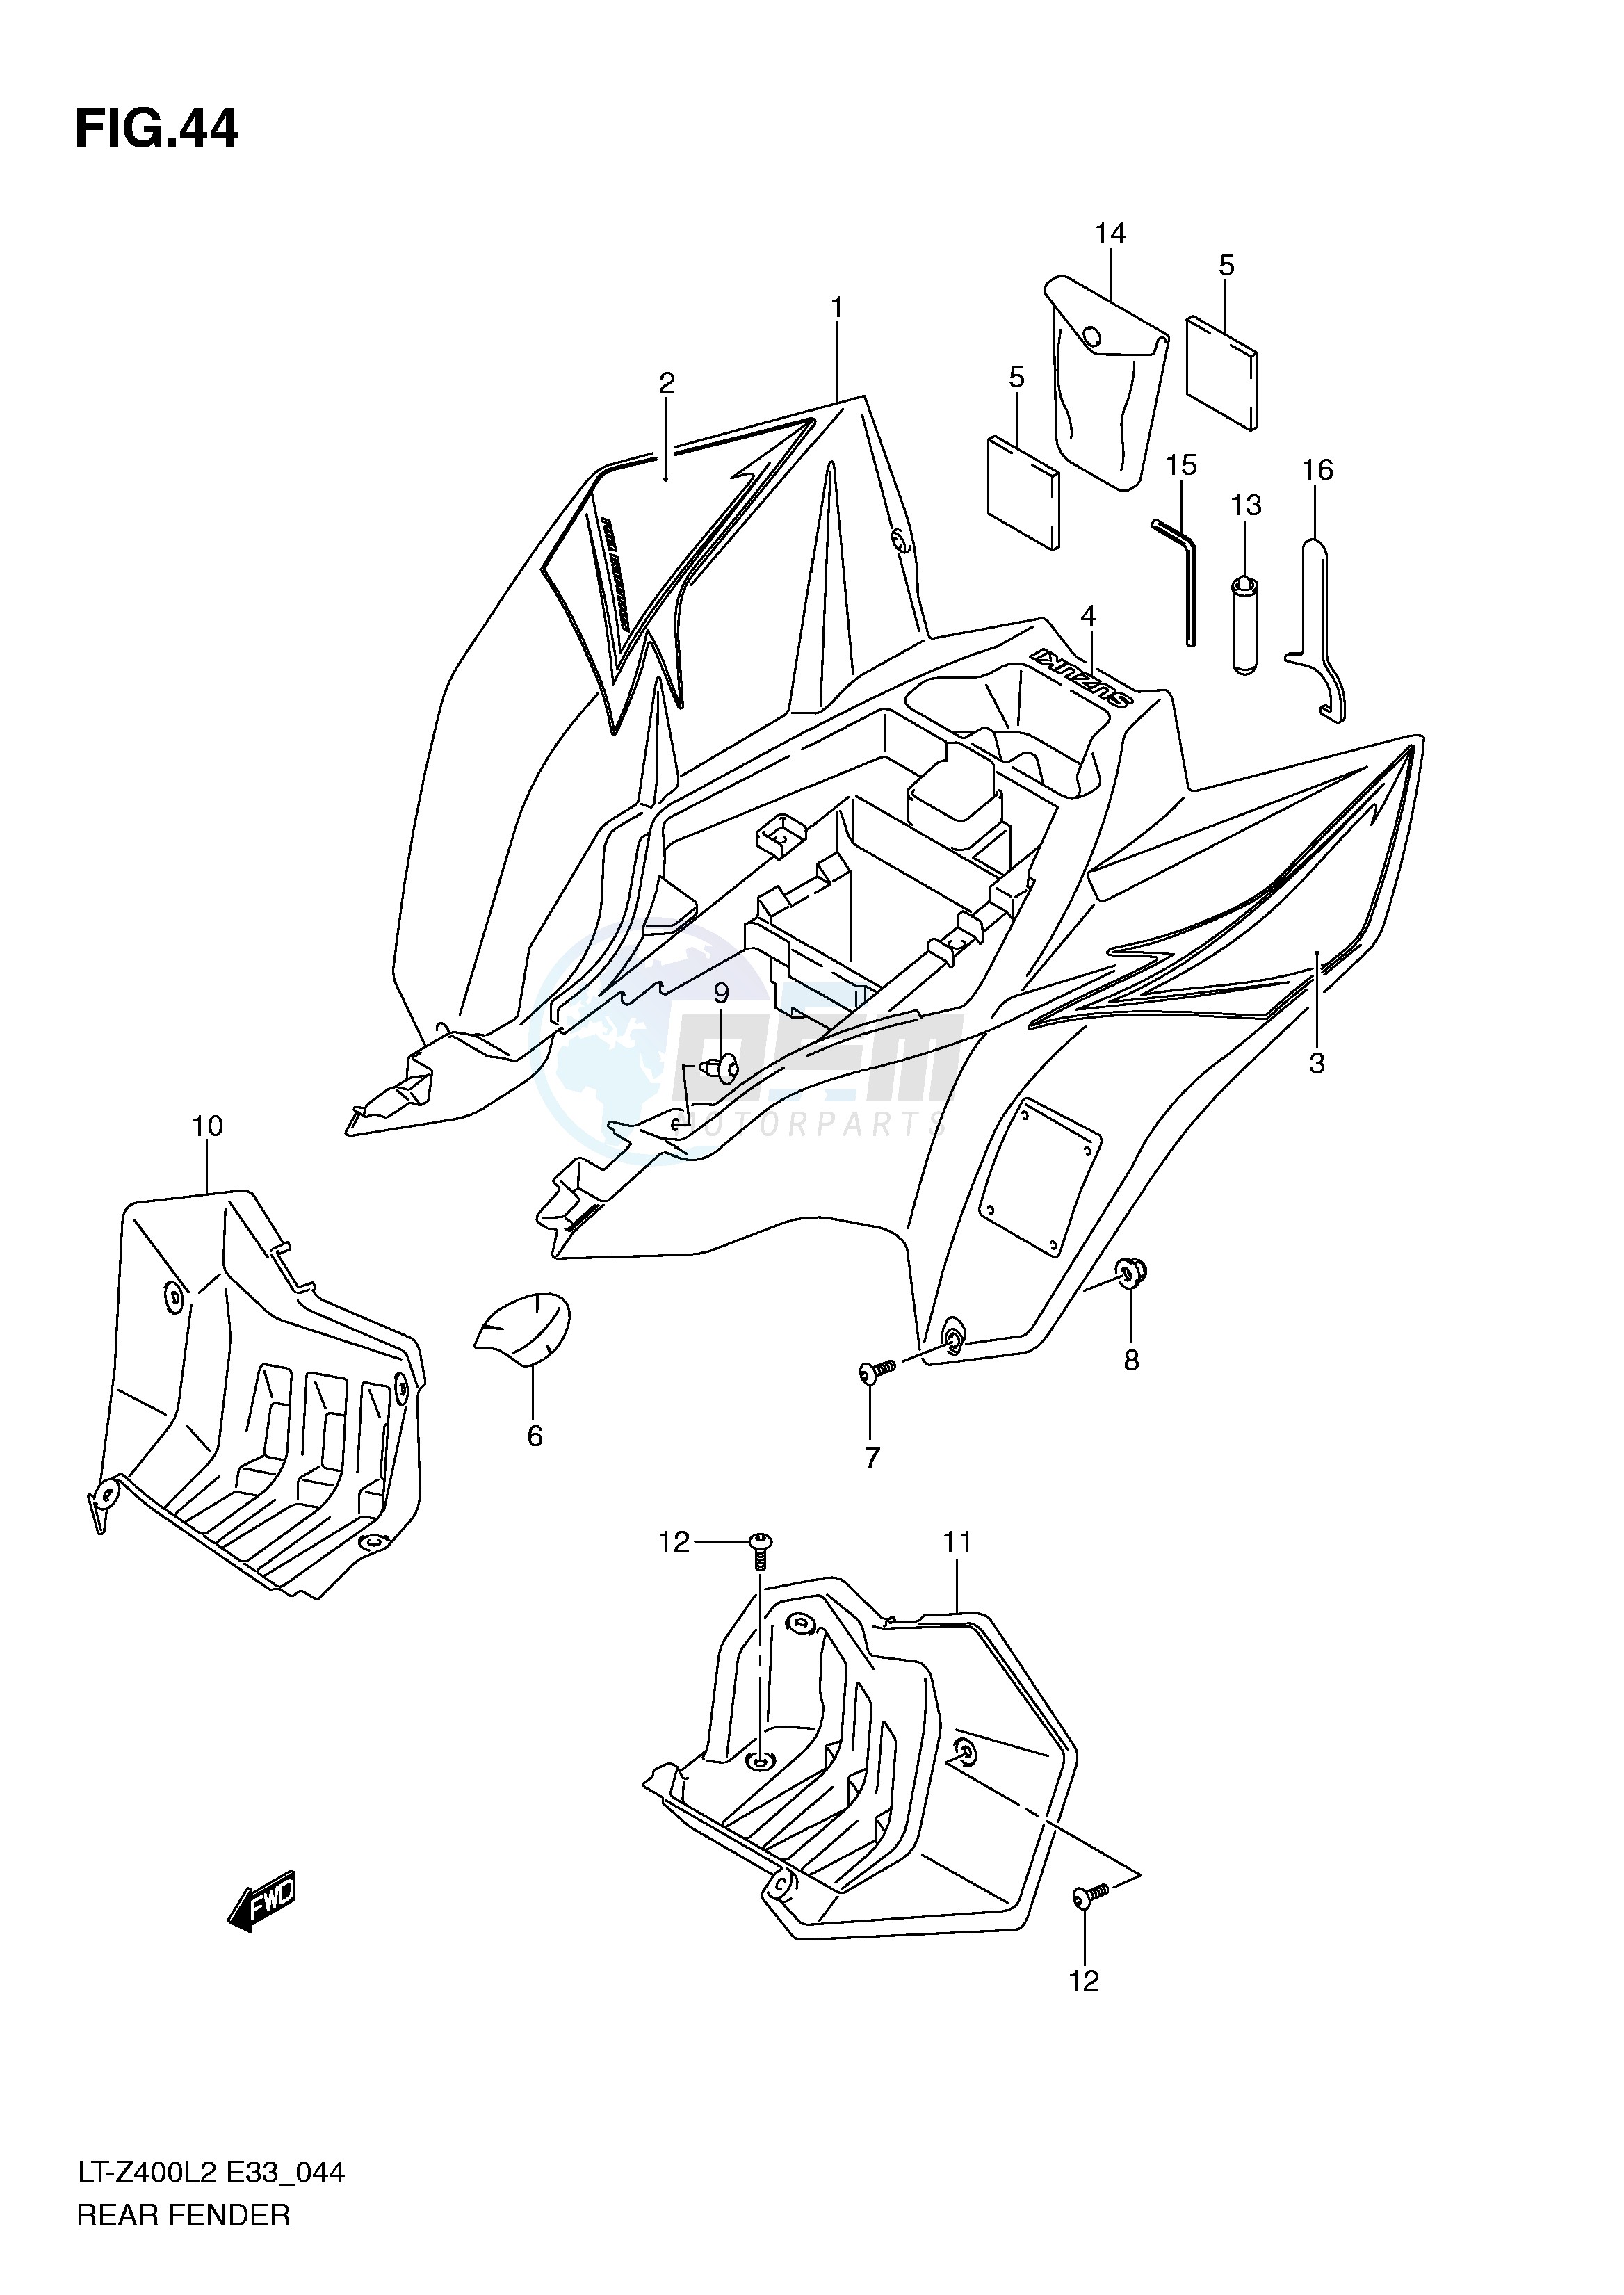 REAR FENDER (LT-Z400L2 E33) blueprint